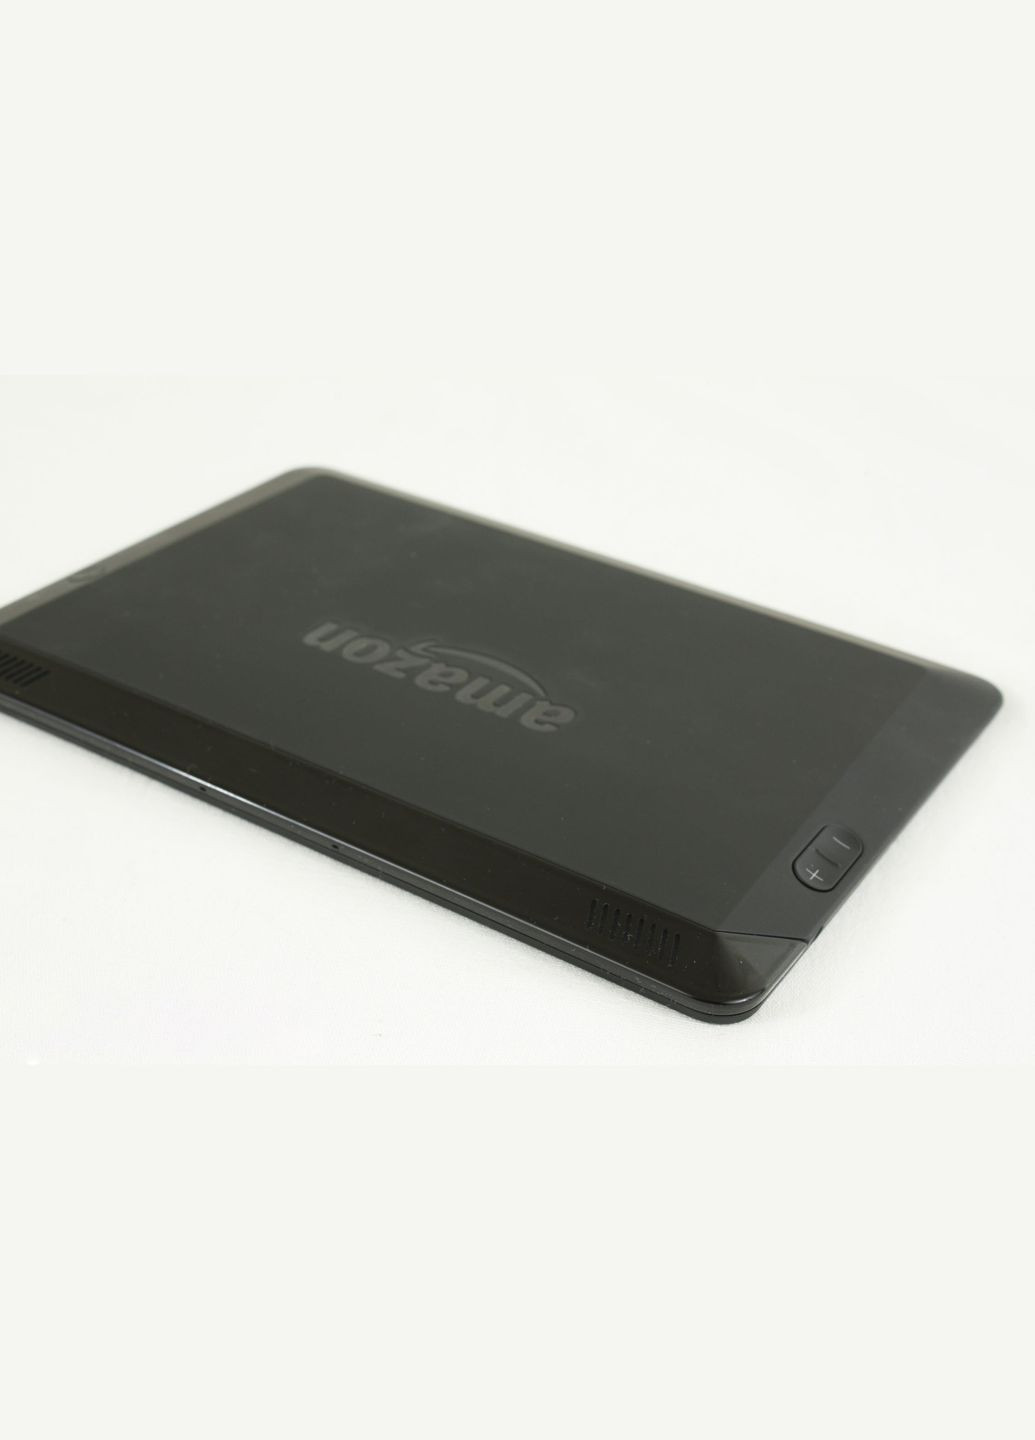 Планшет Kindle Fire HDX 7" 16Gb Amazon (292132580)